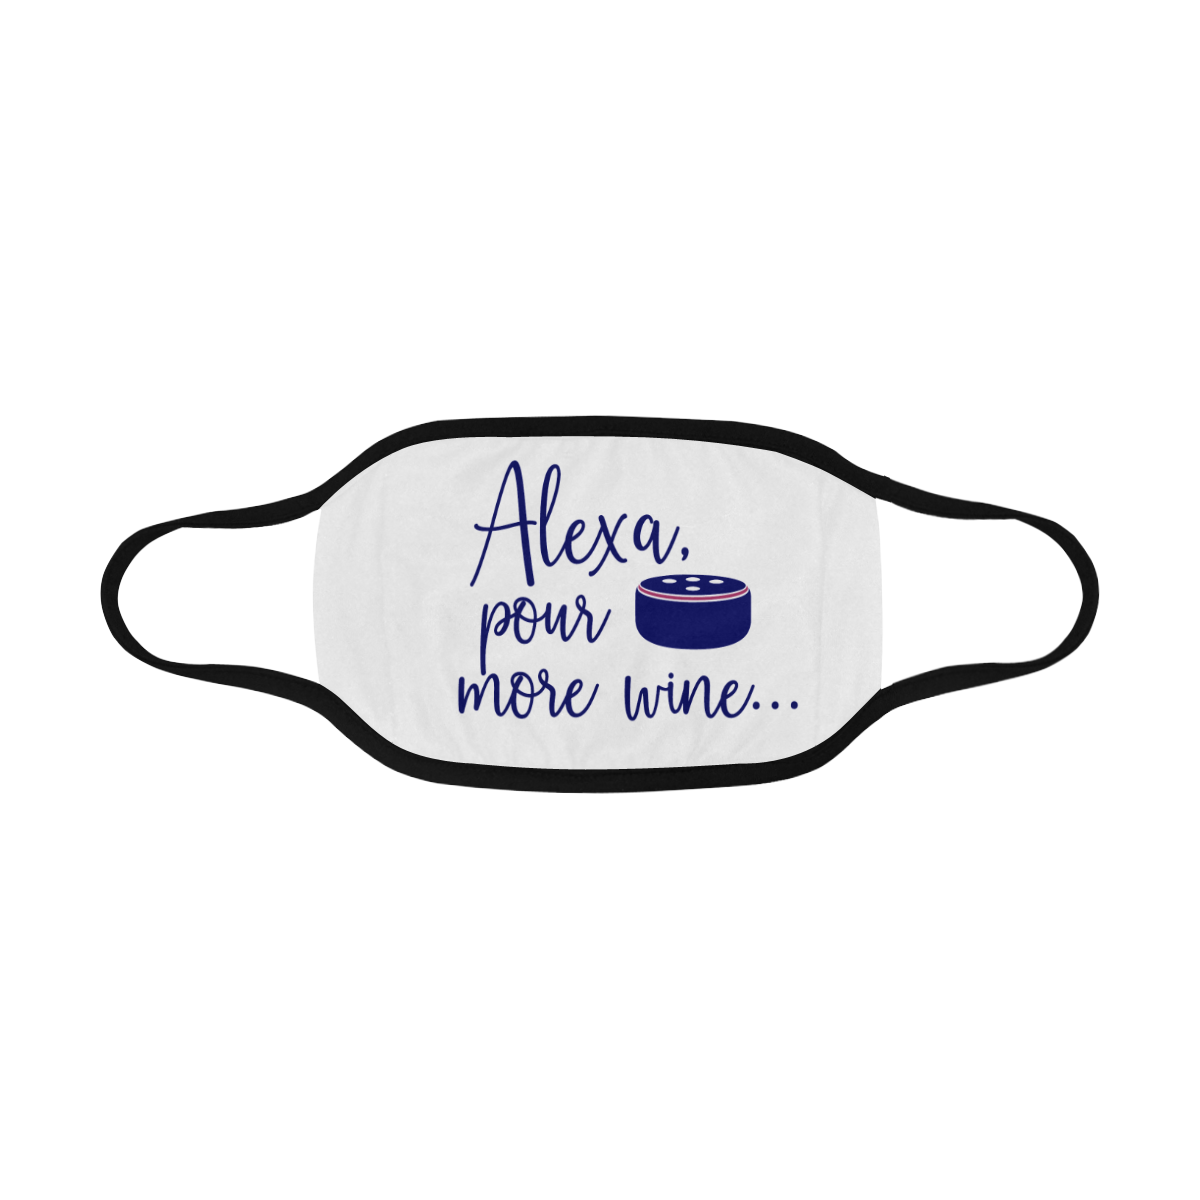 Humor - Alexa pour more wine - dark blue on white Mouth Mask